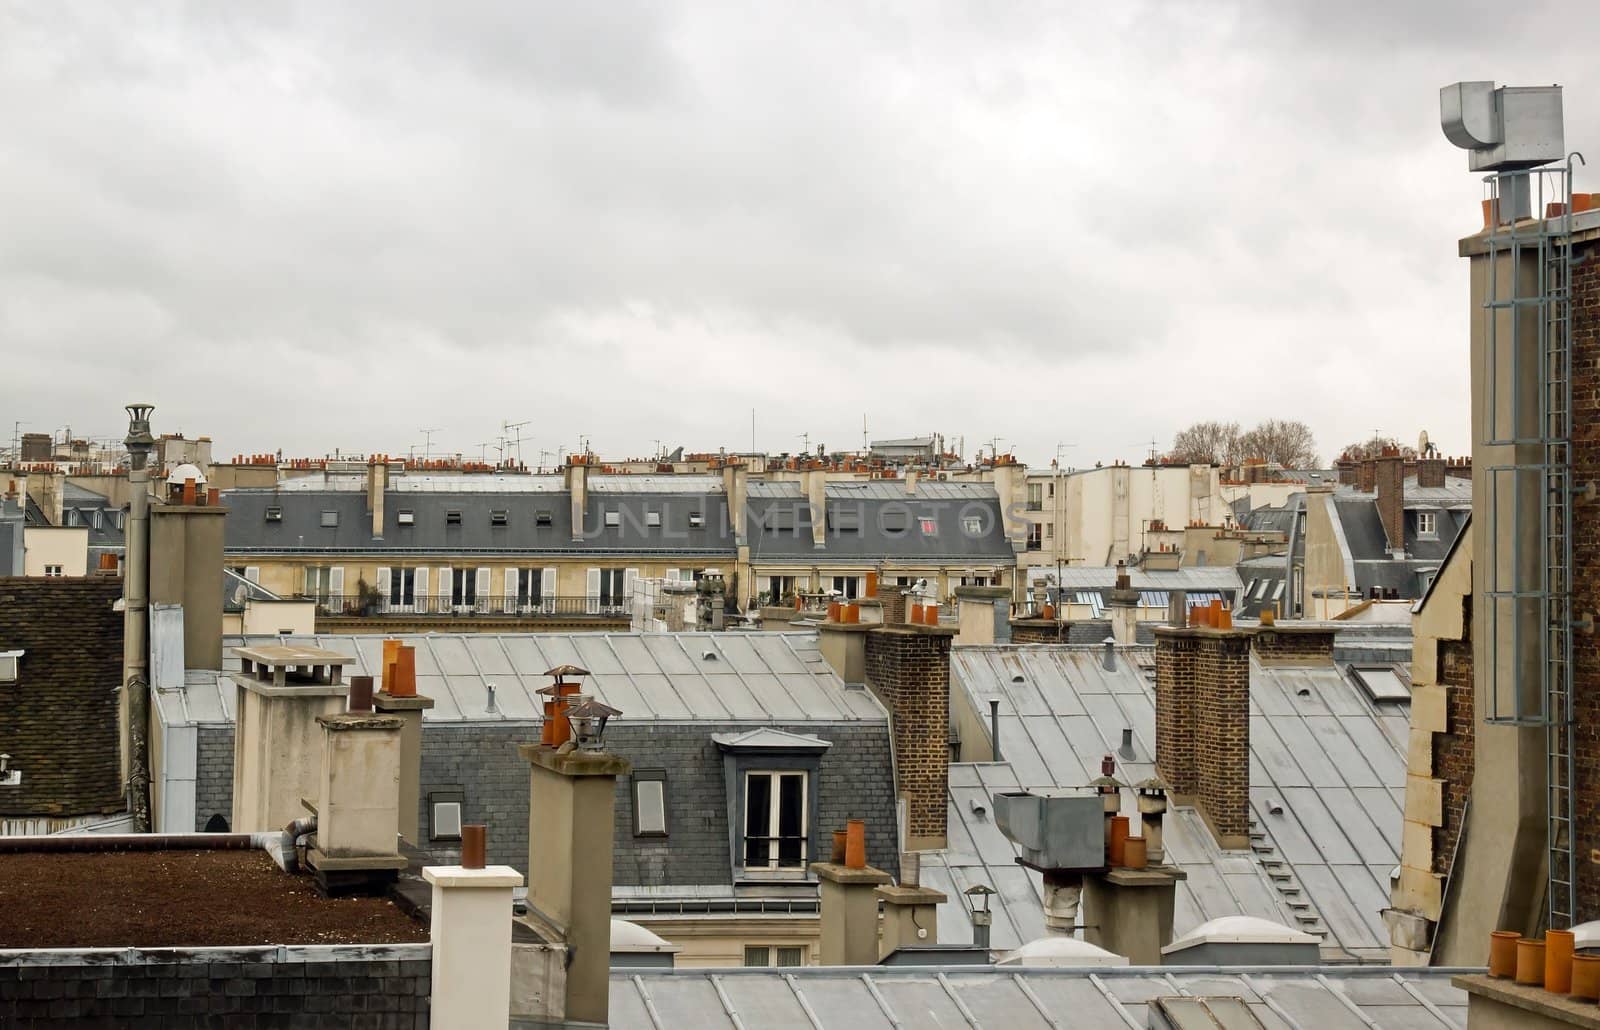 chimneys in the roofs of Paris by neko92vl